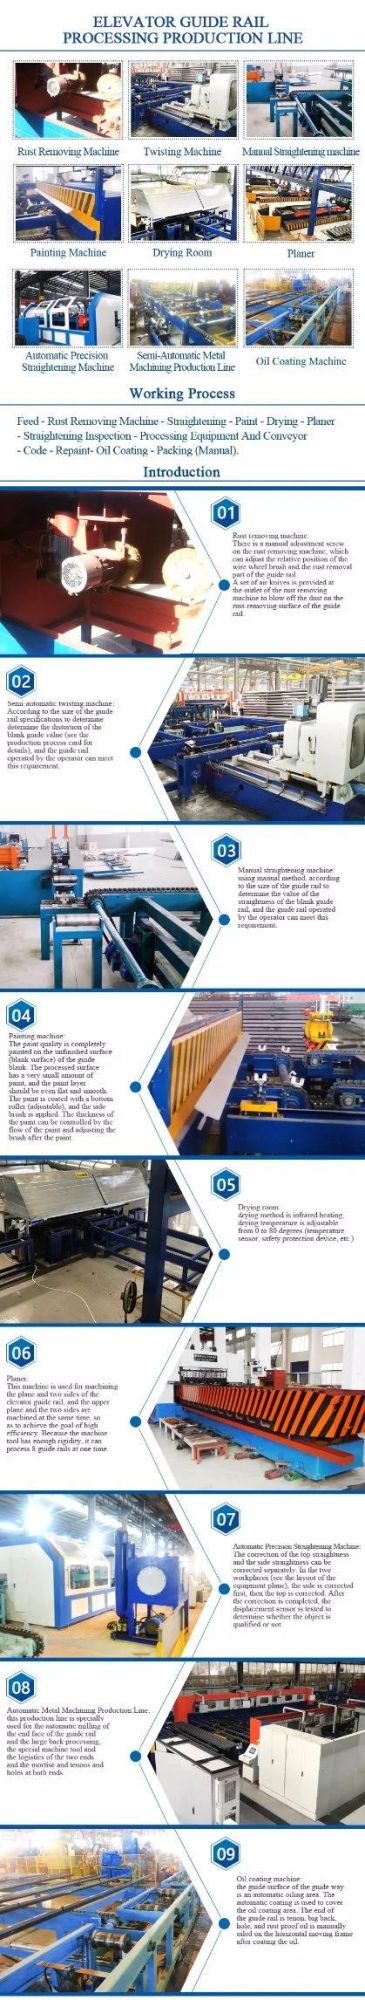 Bracket Hollow Lift Direct Factory Elevator Guide Rail Profile Rolling Machine